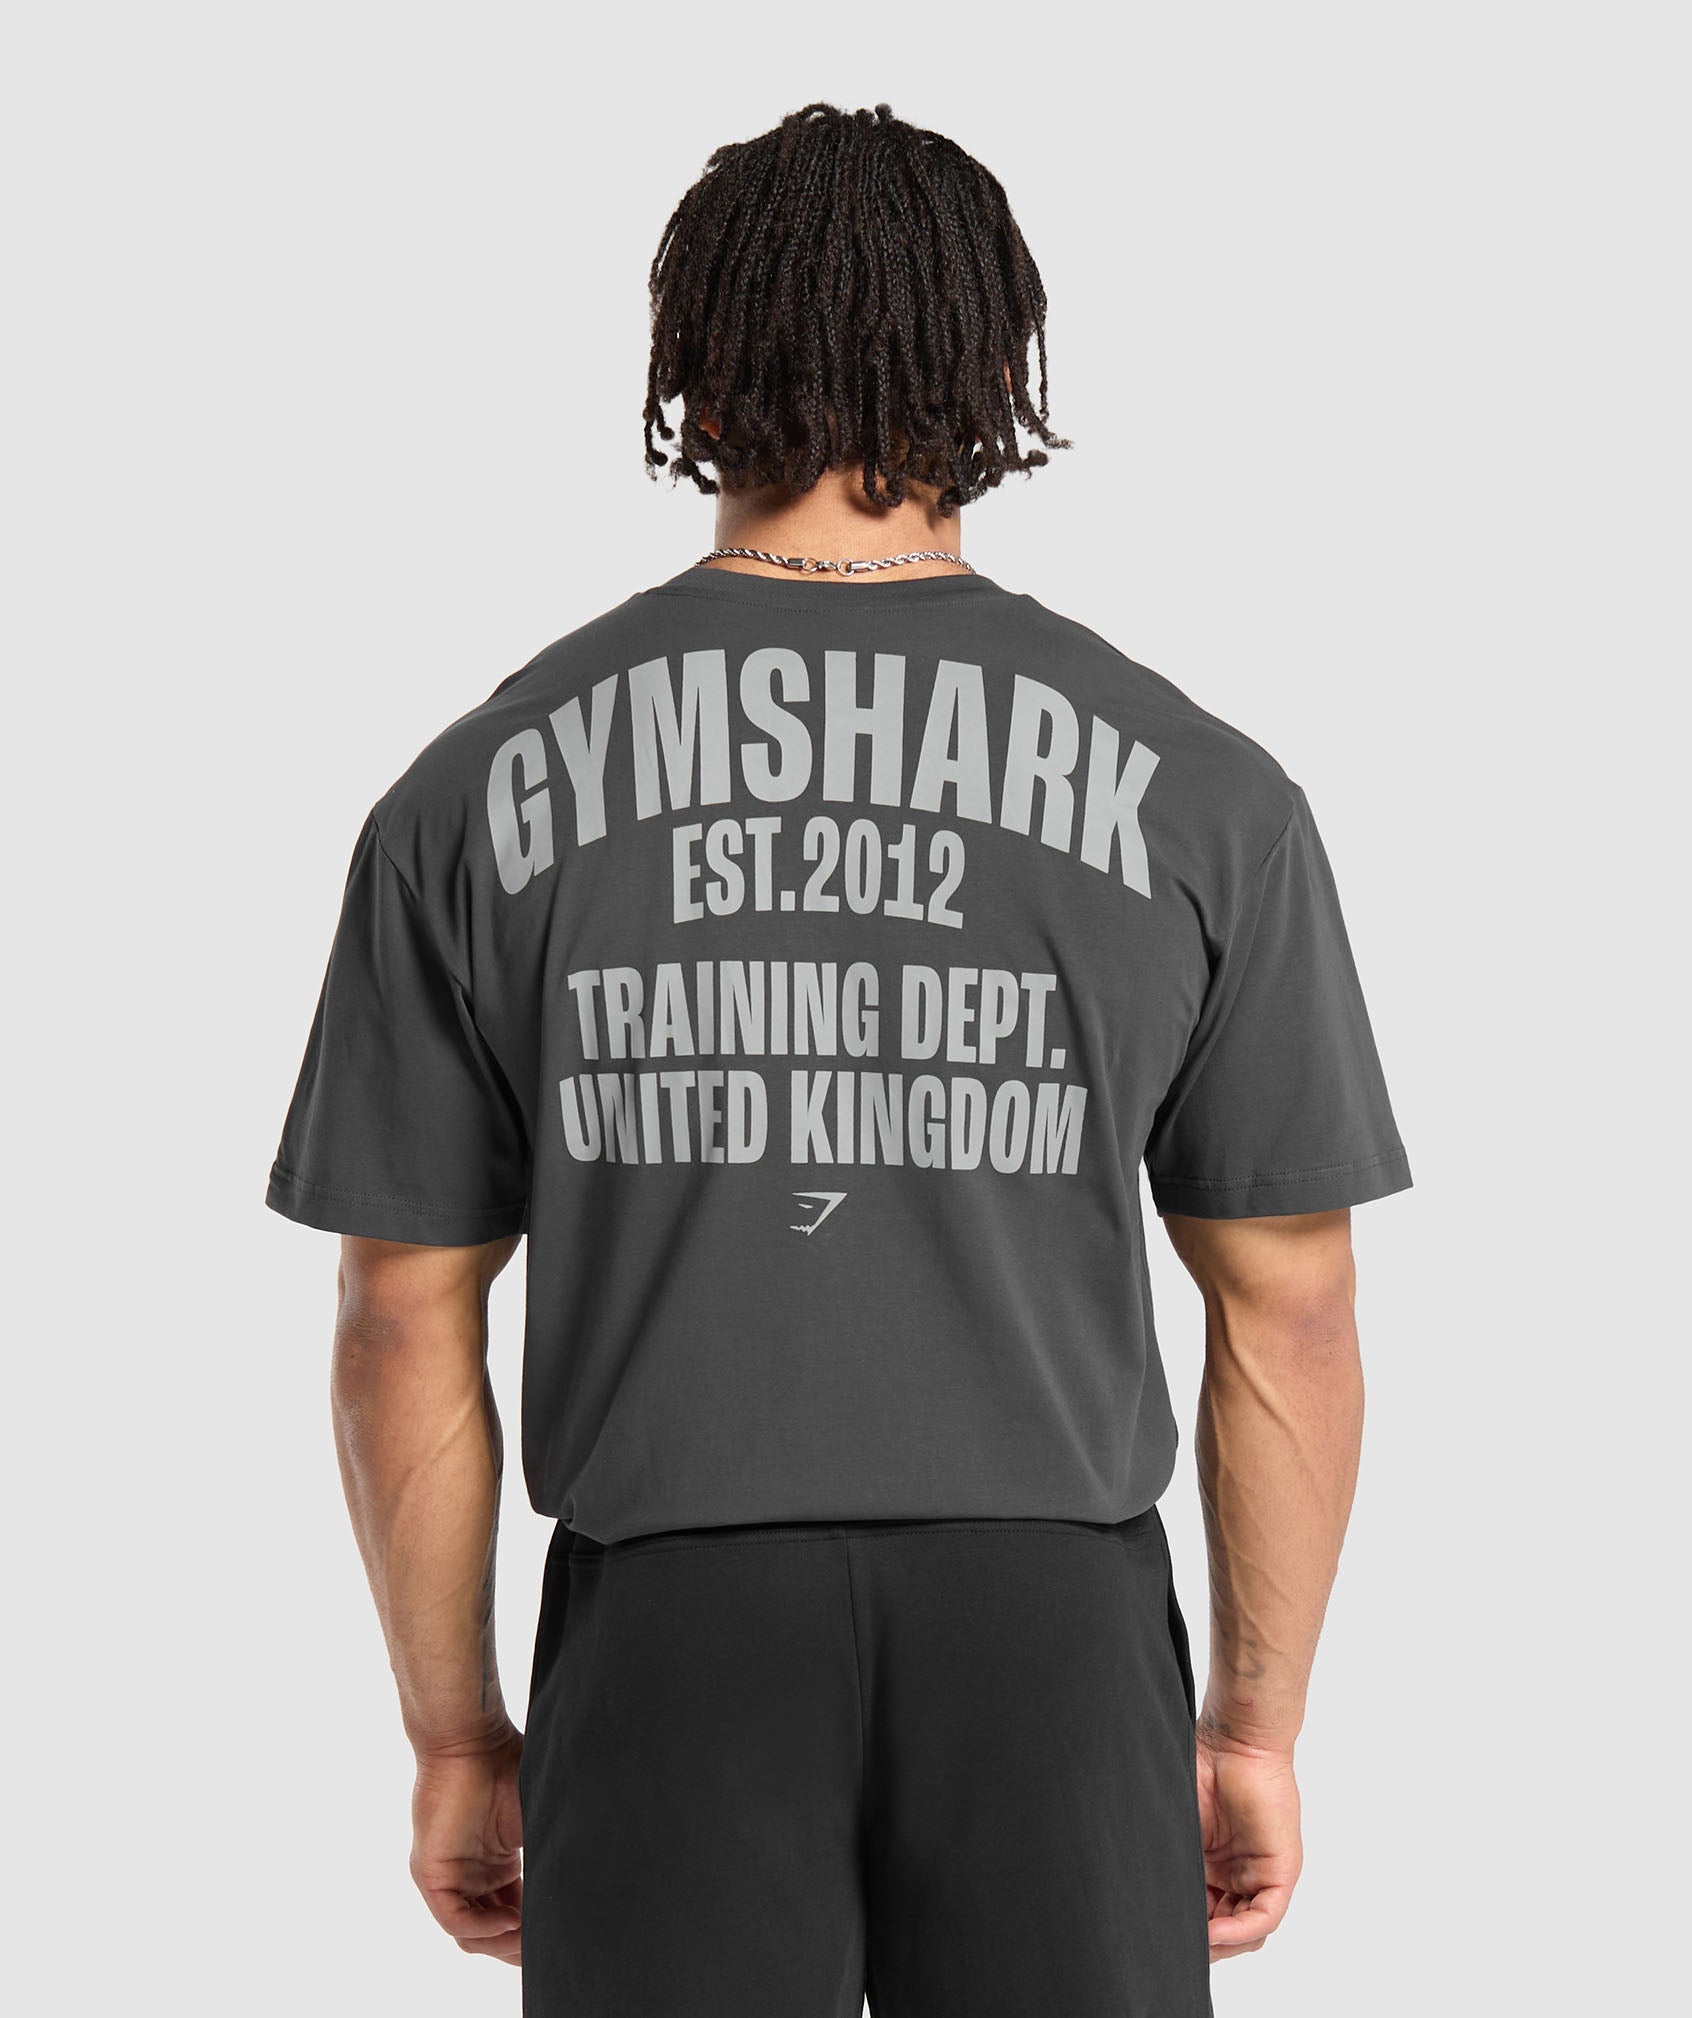 Training Dept. UK T-Shirt in Asphalt Grey - view 1